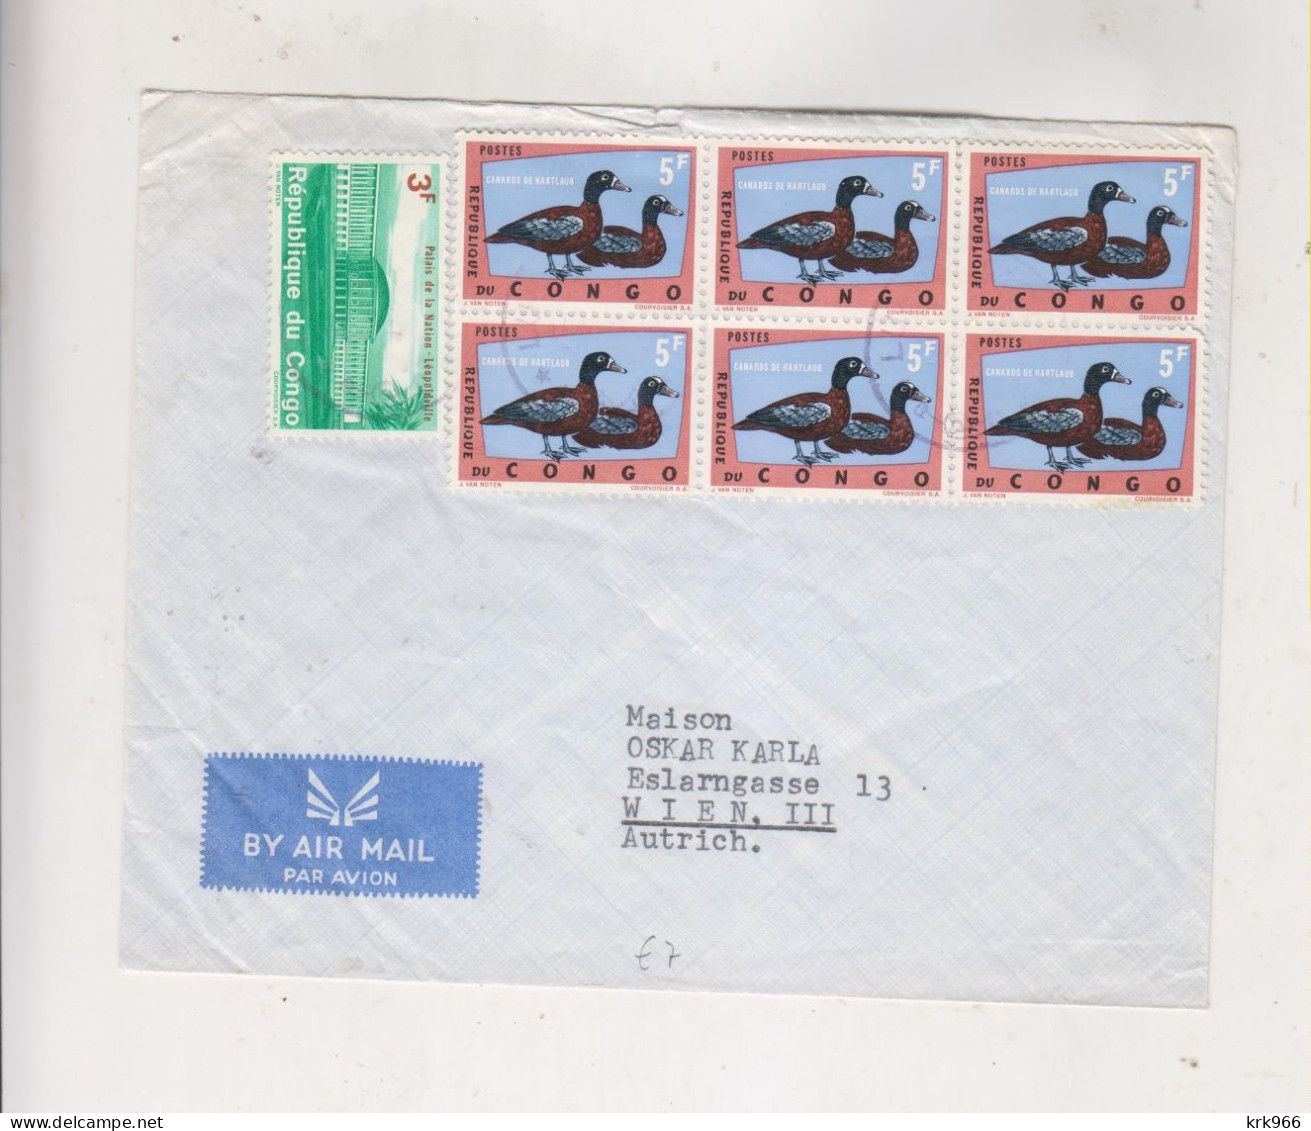 CONGO LUBUMBASHI  Airmail Cover To Austria - Briefe U. Dokumente